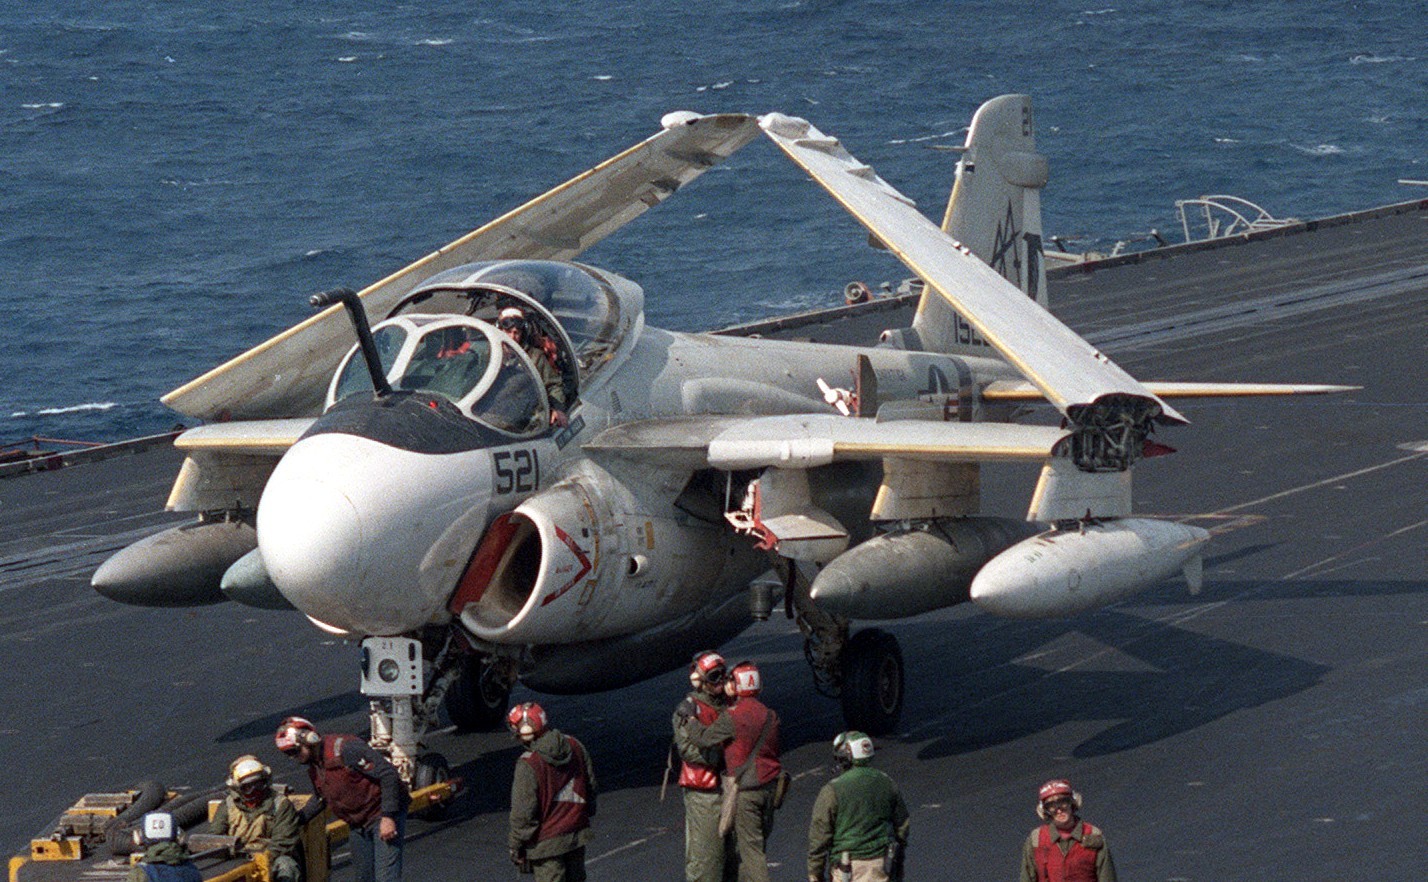 va-85 black falcons attack squadron us navy a-6e ka-6d intruder carrier air wing cvw-17 uss saratoga cv-60 23